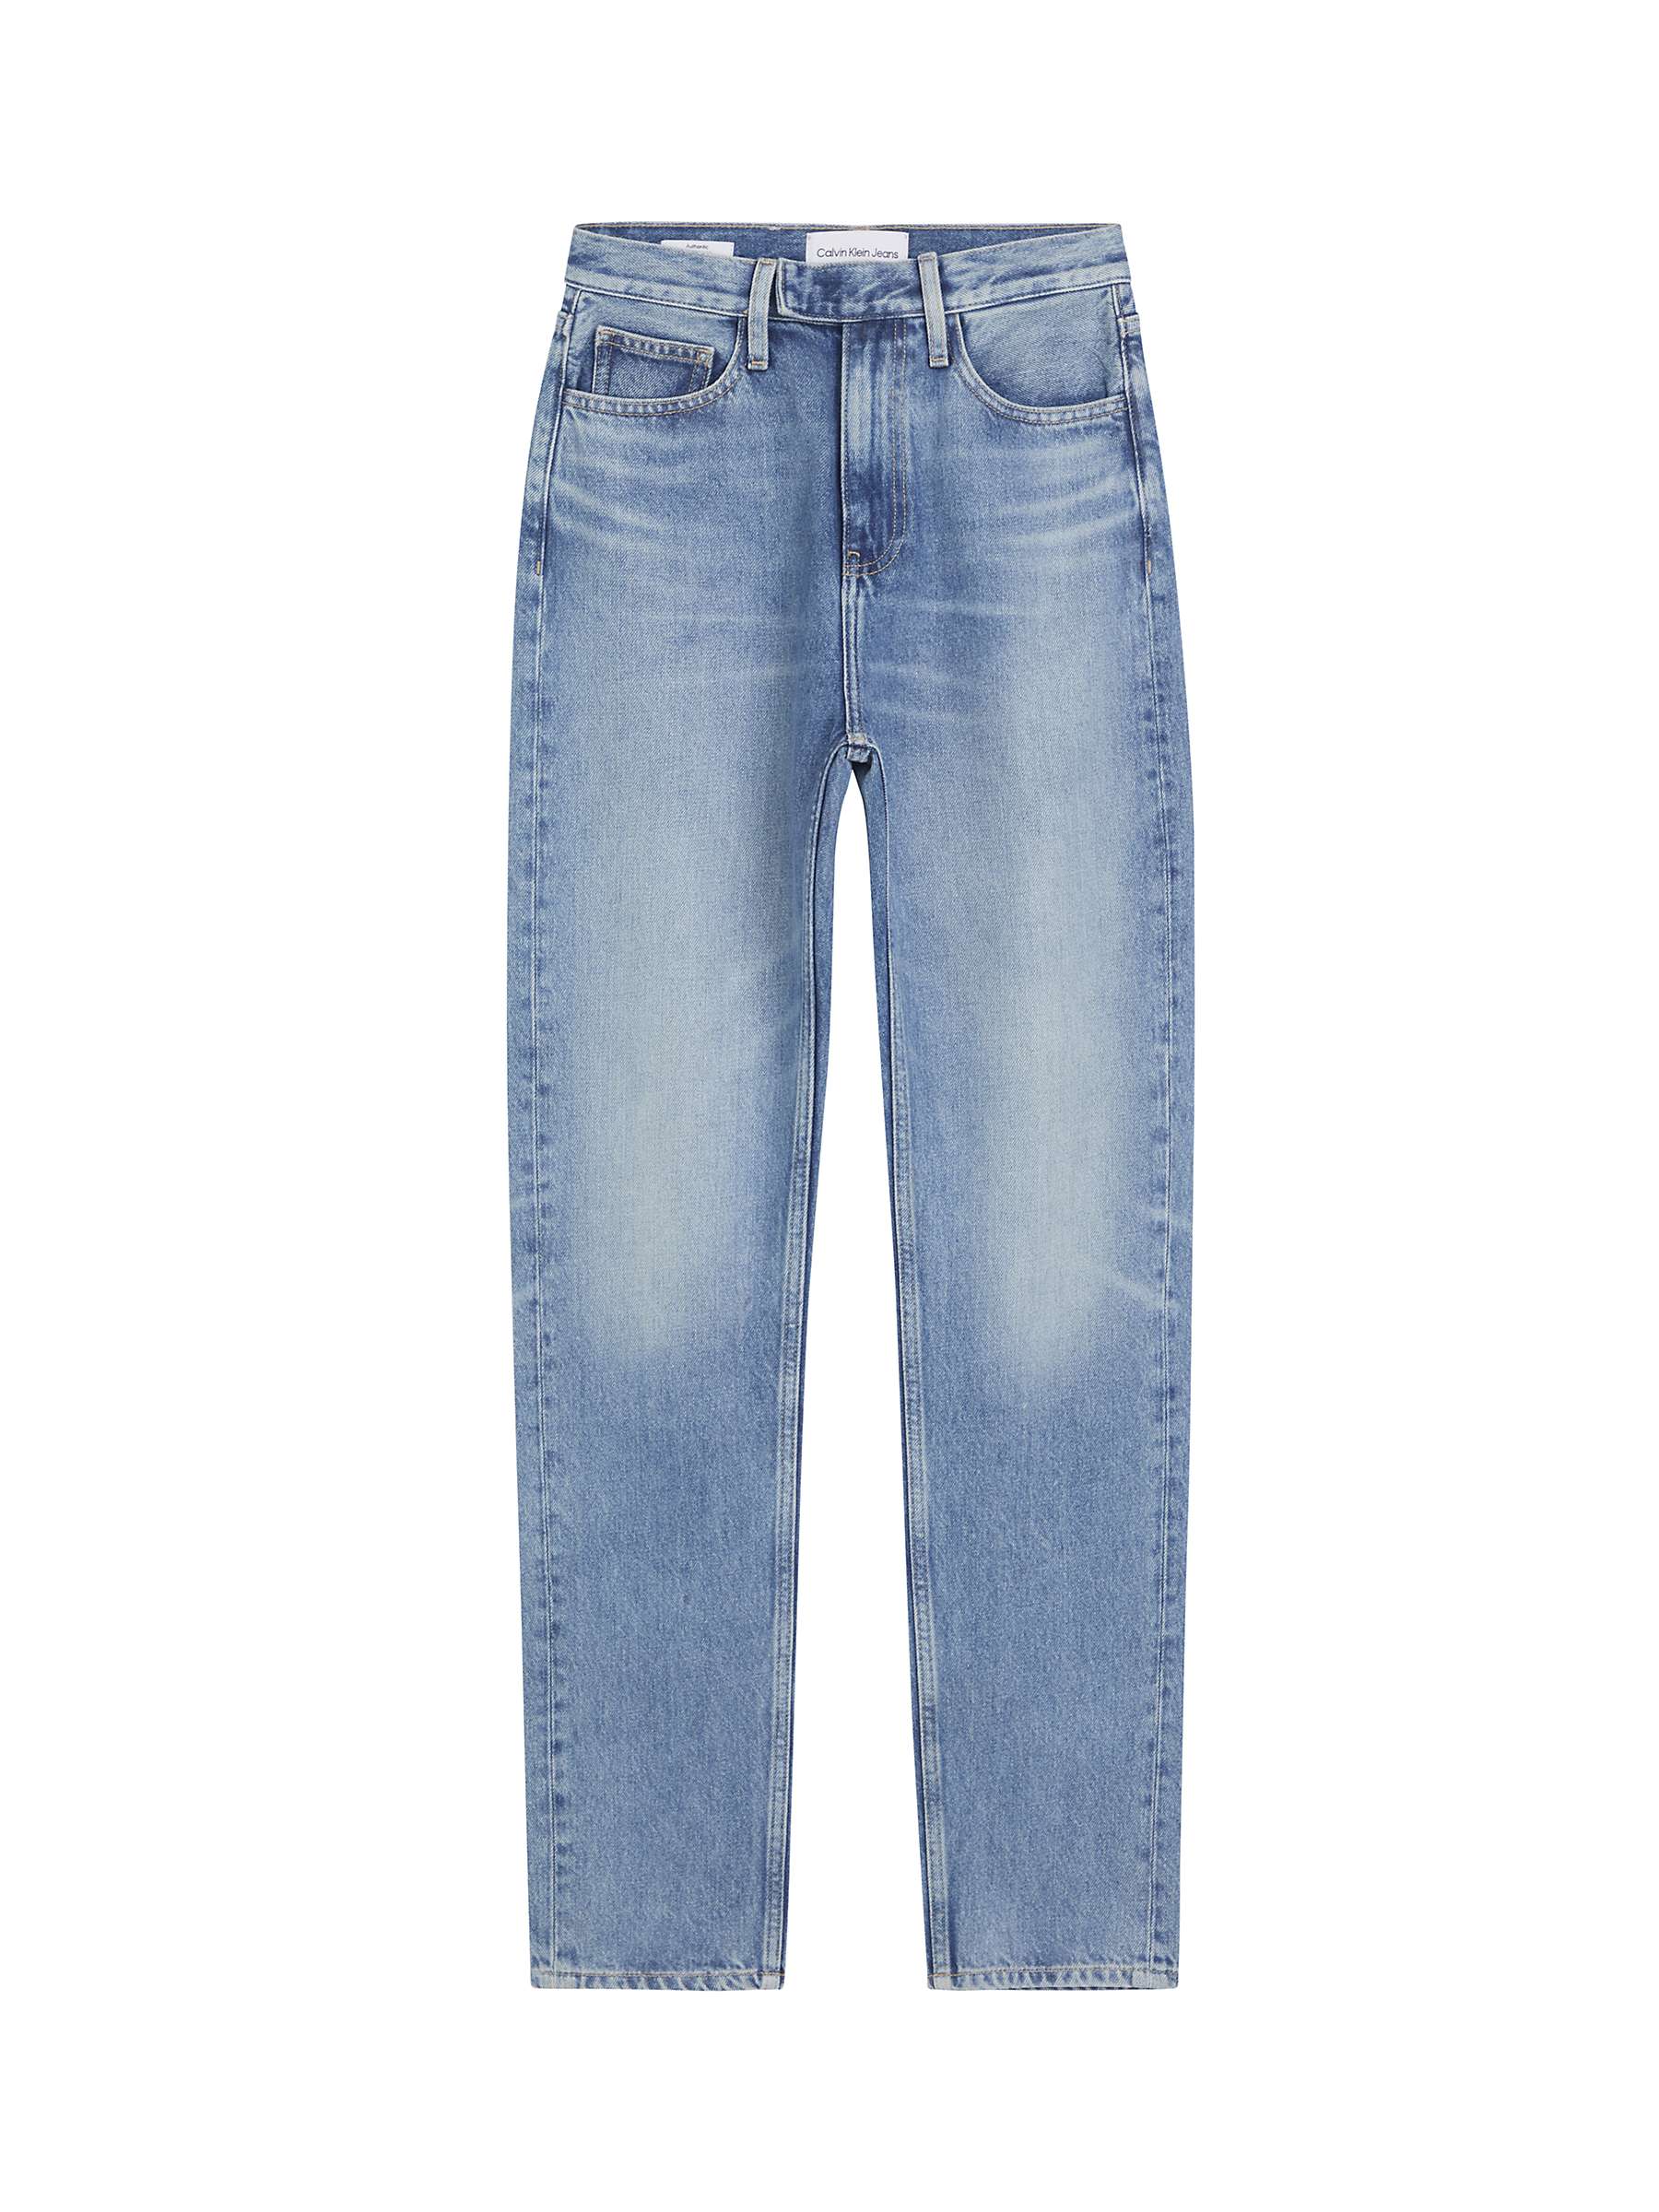 Buy Calvin Klein Authentic Slim Jeans, Mid Blue Online at johnlewis.com